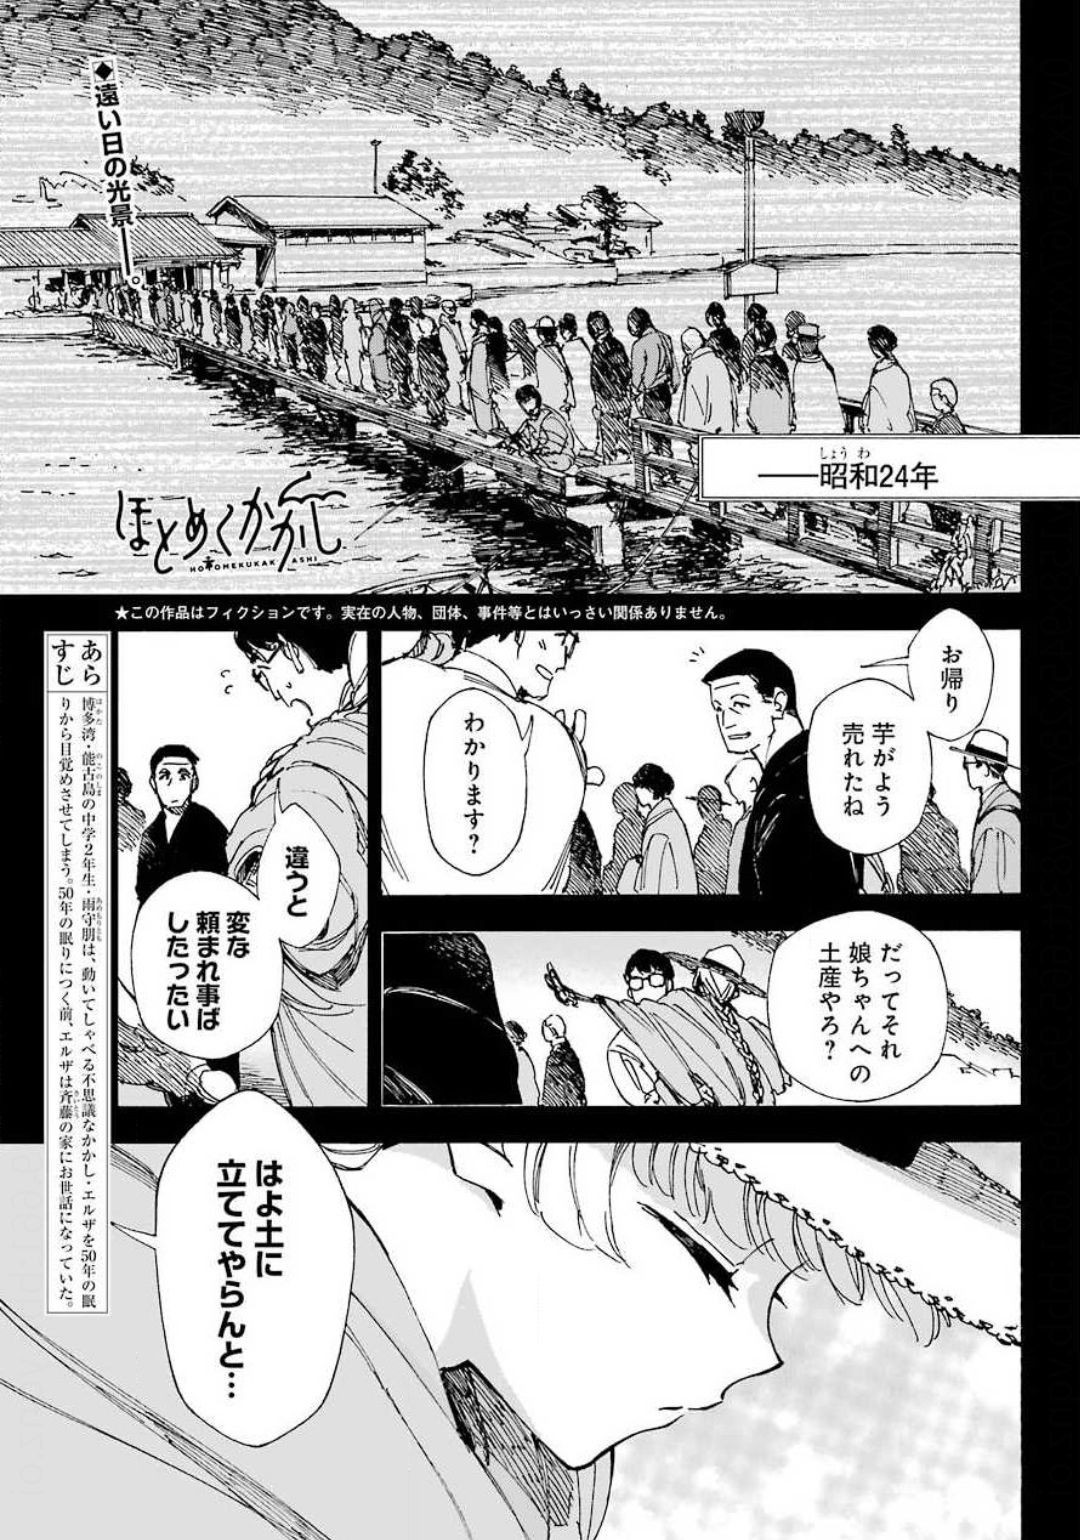 Hotomeku-kakashi - Chapter 07-1 - Page 1